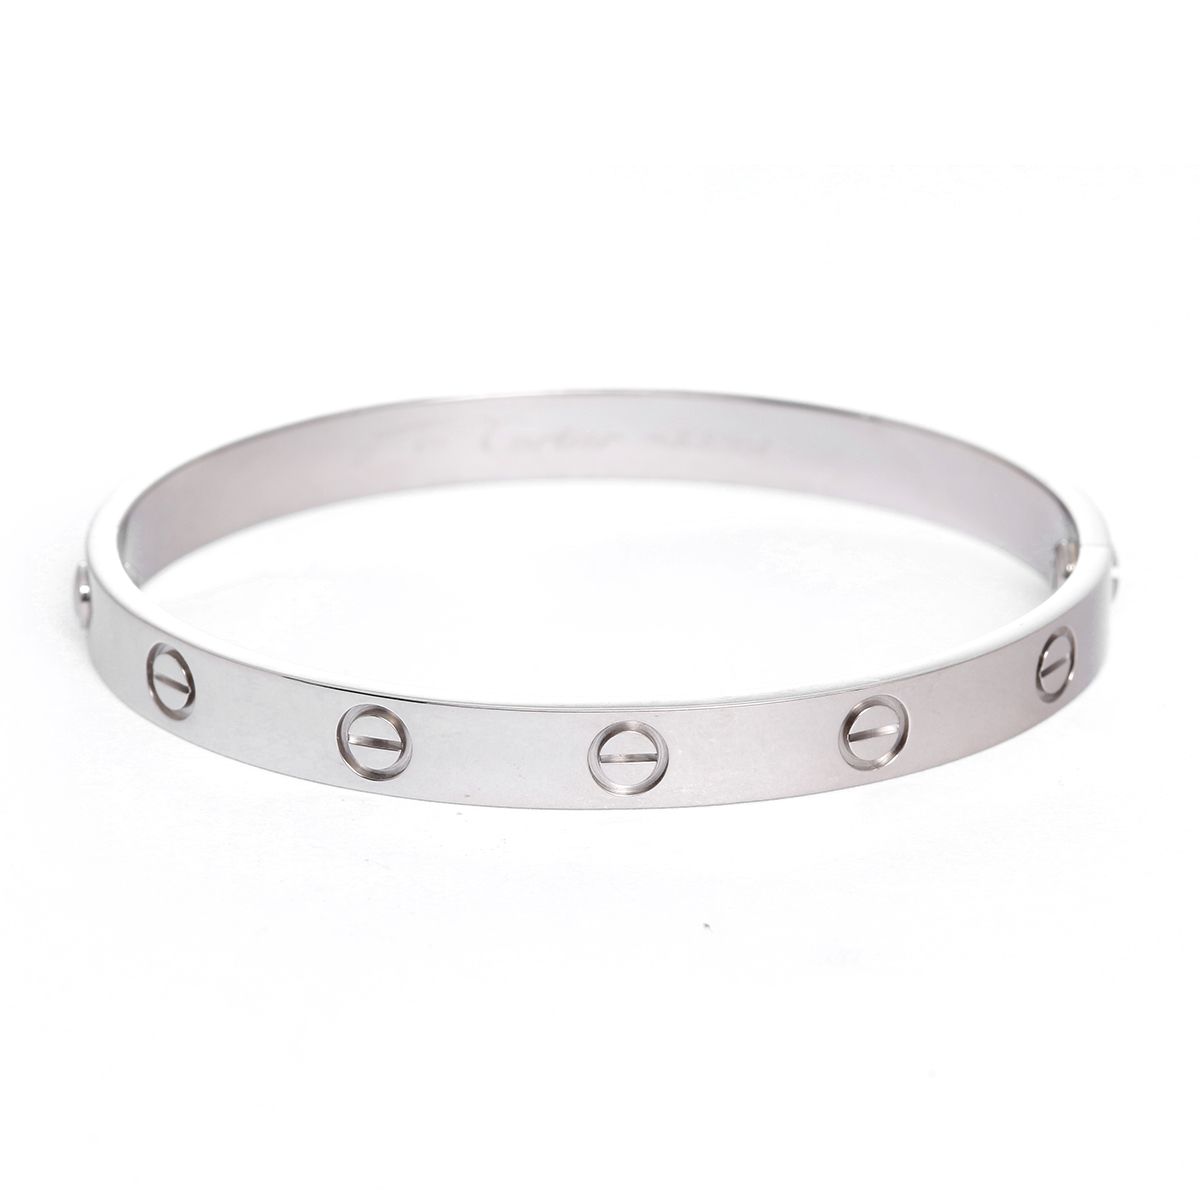 Accessories | Tennis Bracelet Size 17 | Poshmark